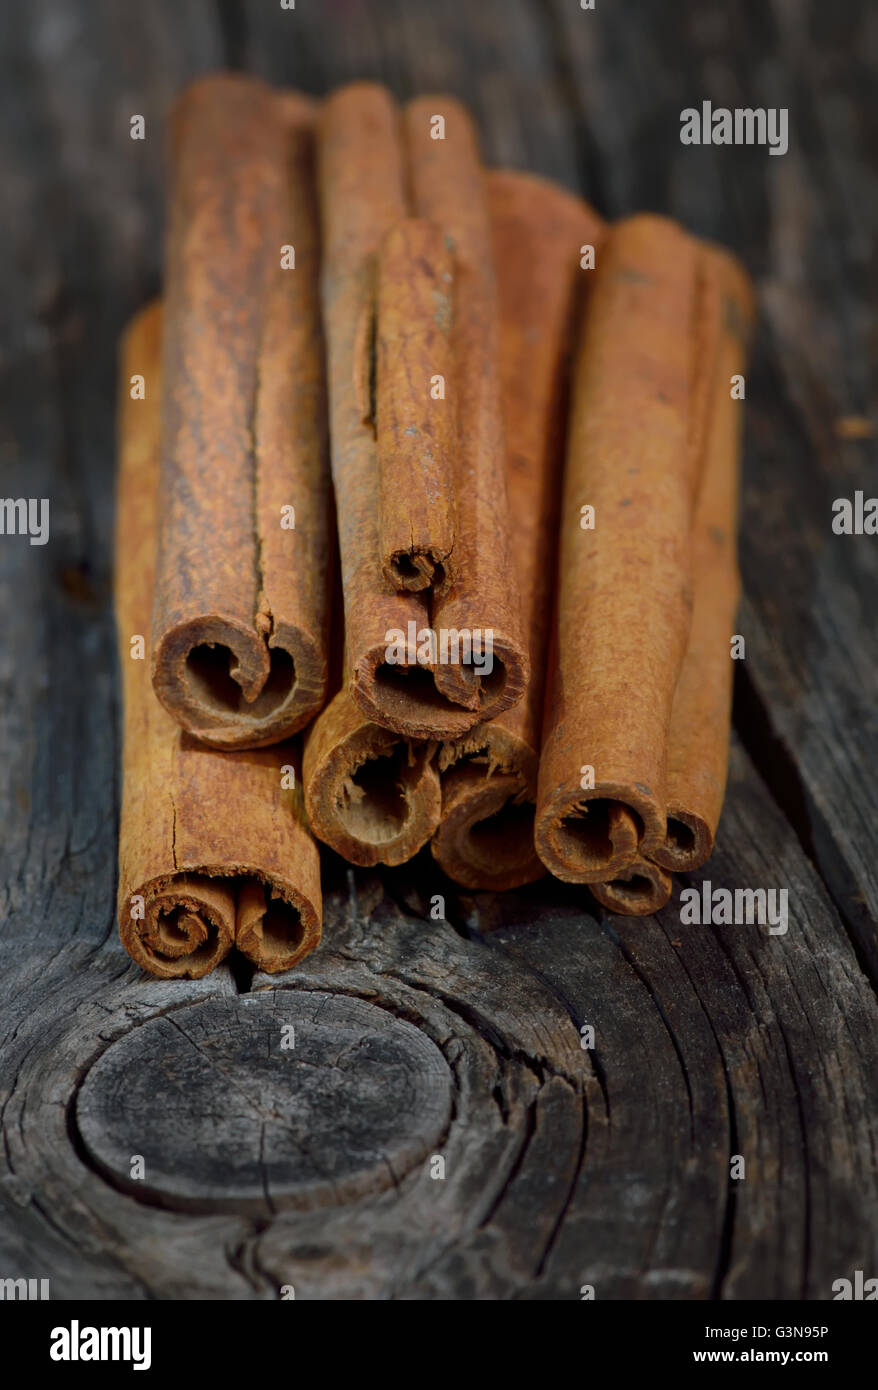 Bunch of cinnamon sticks on wooden table Stock Photo